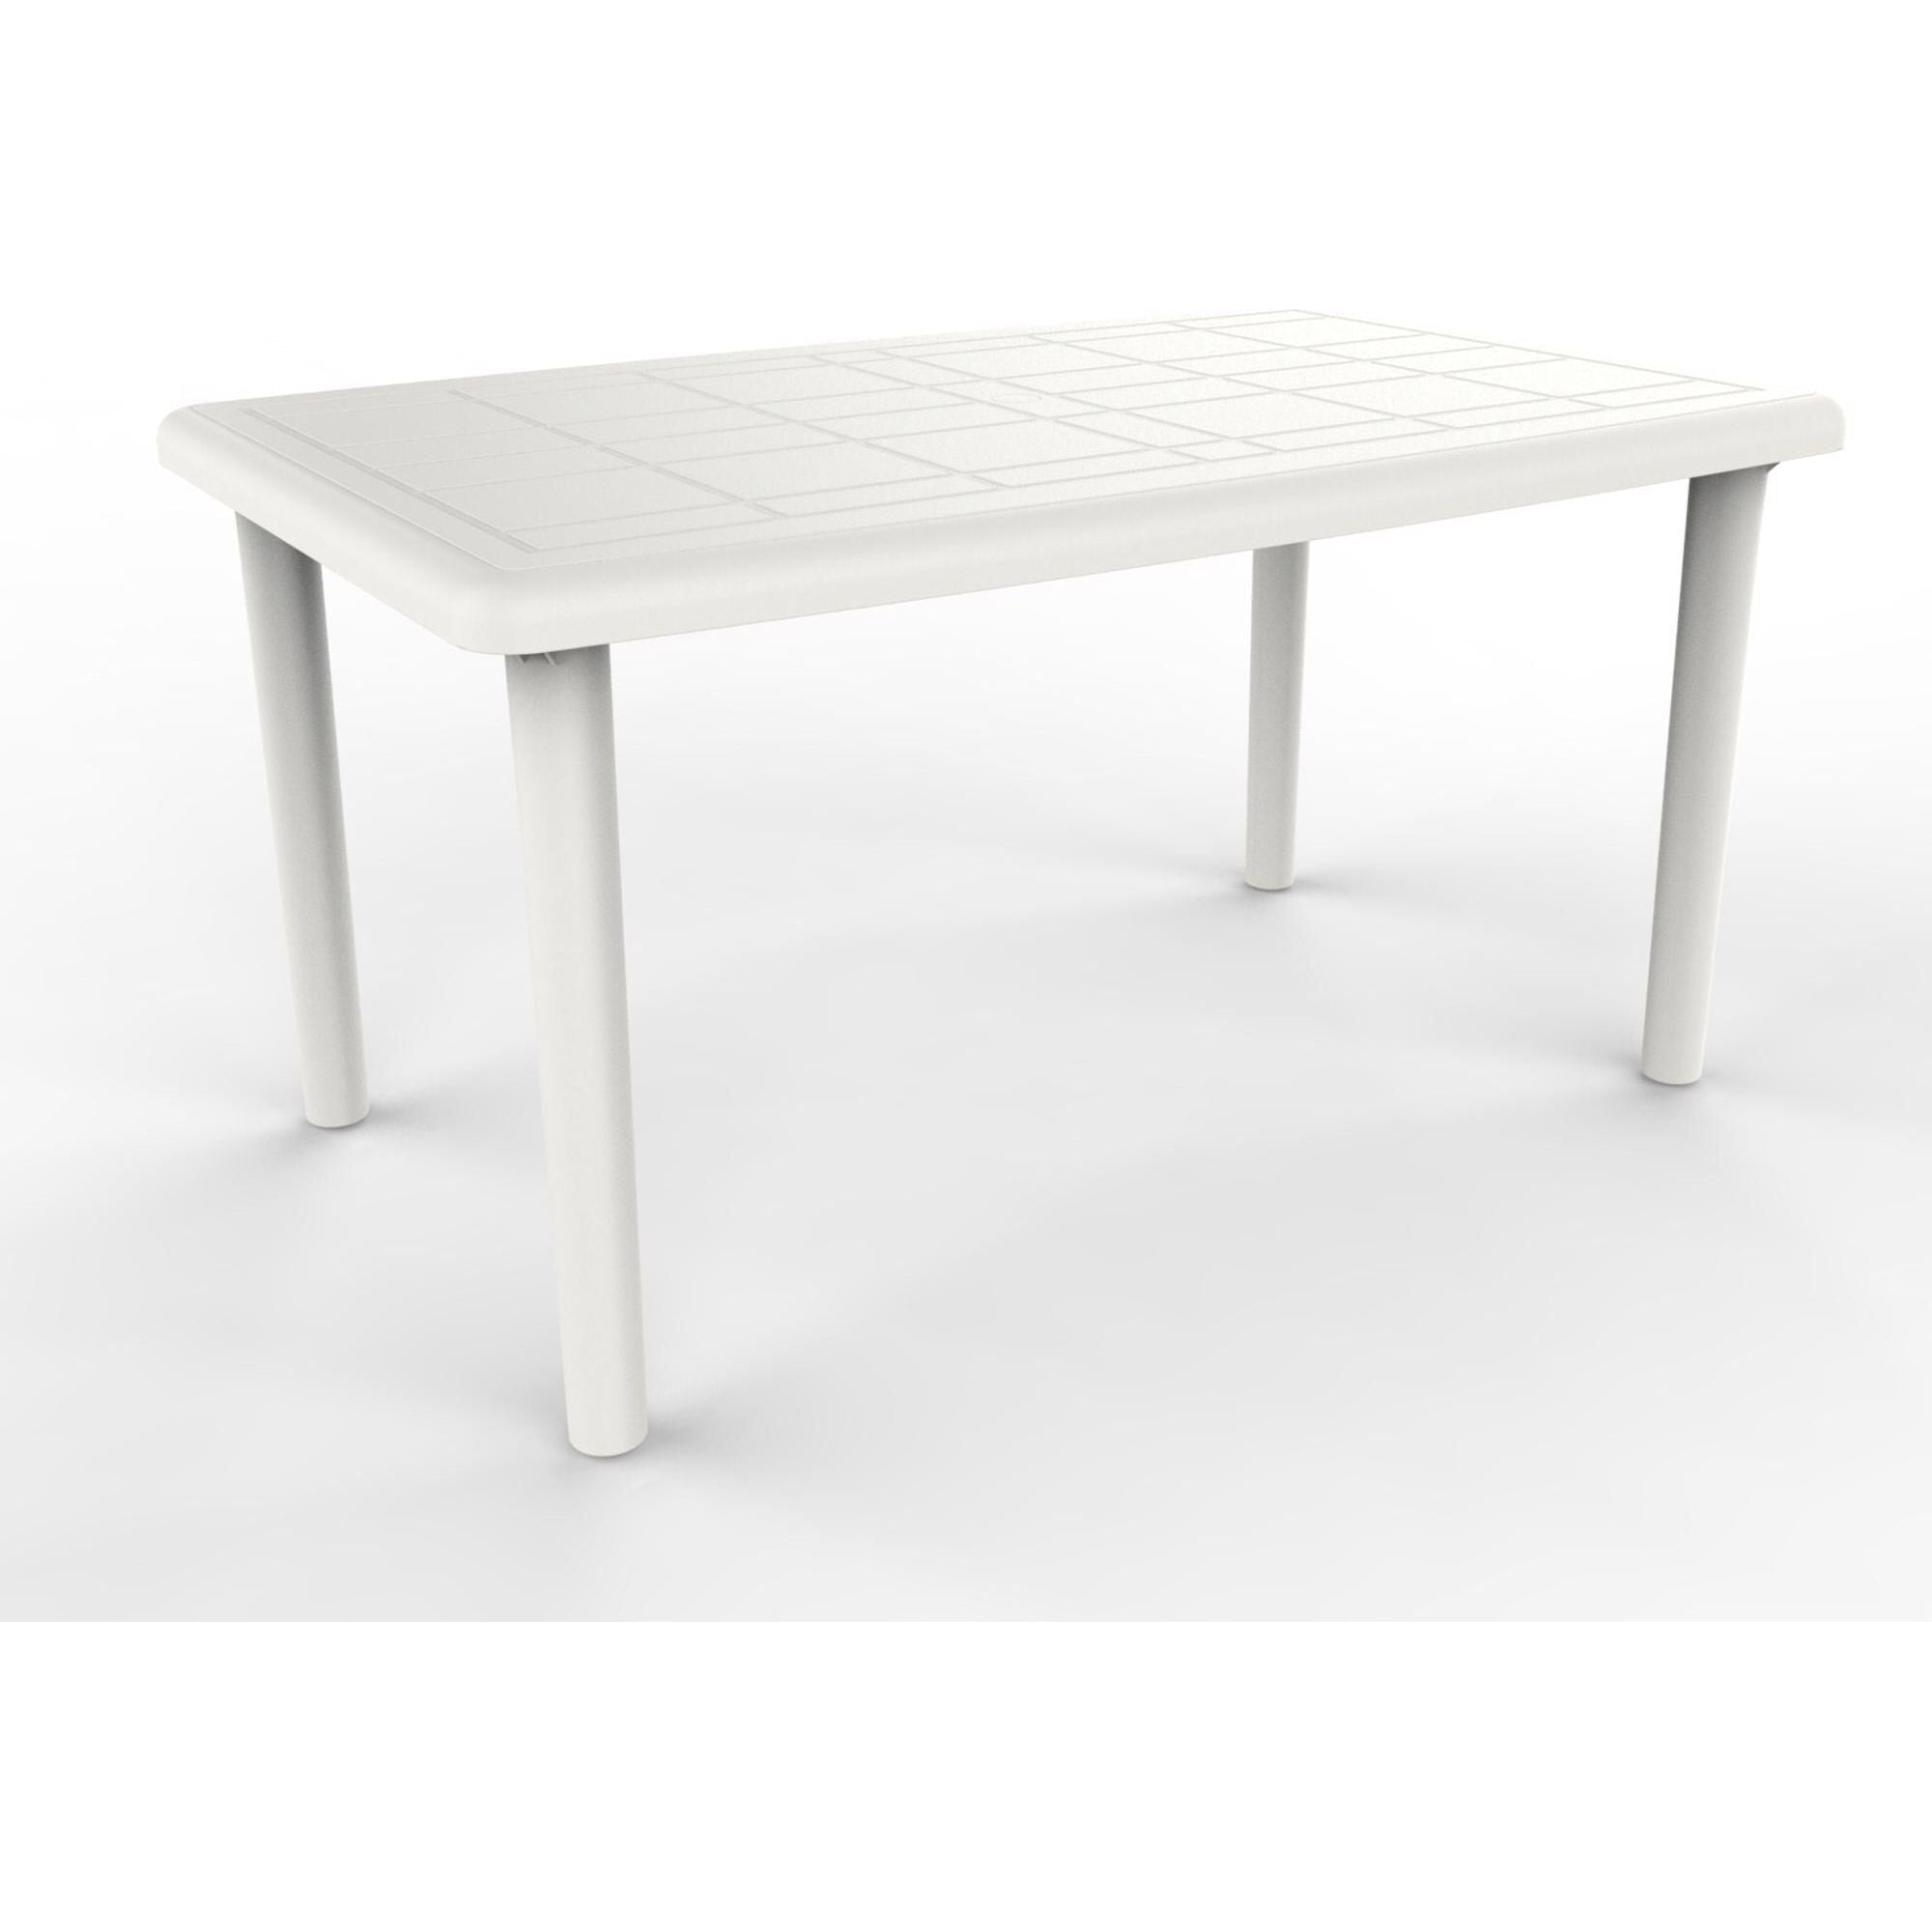 Garbar olot rectangular table outdoor 140x90 white